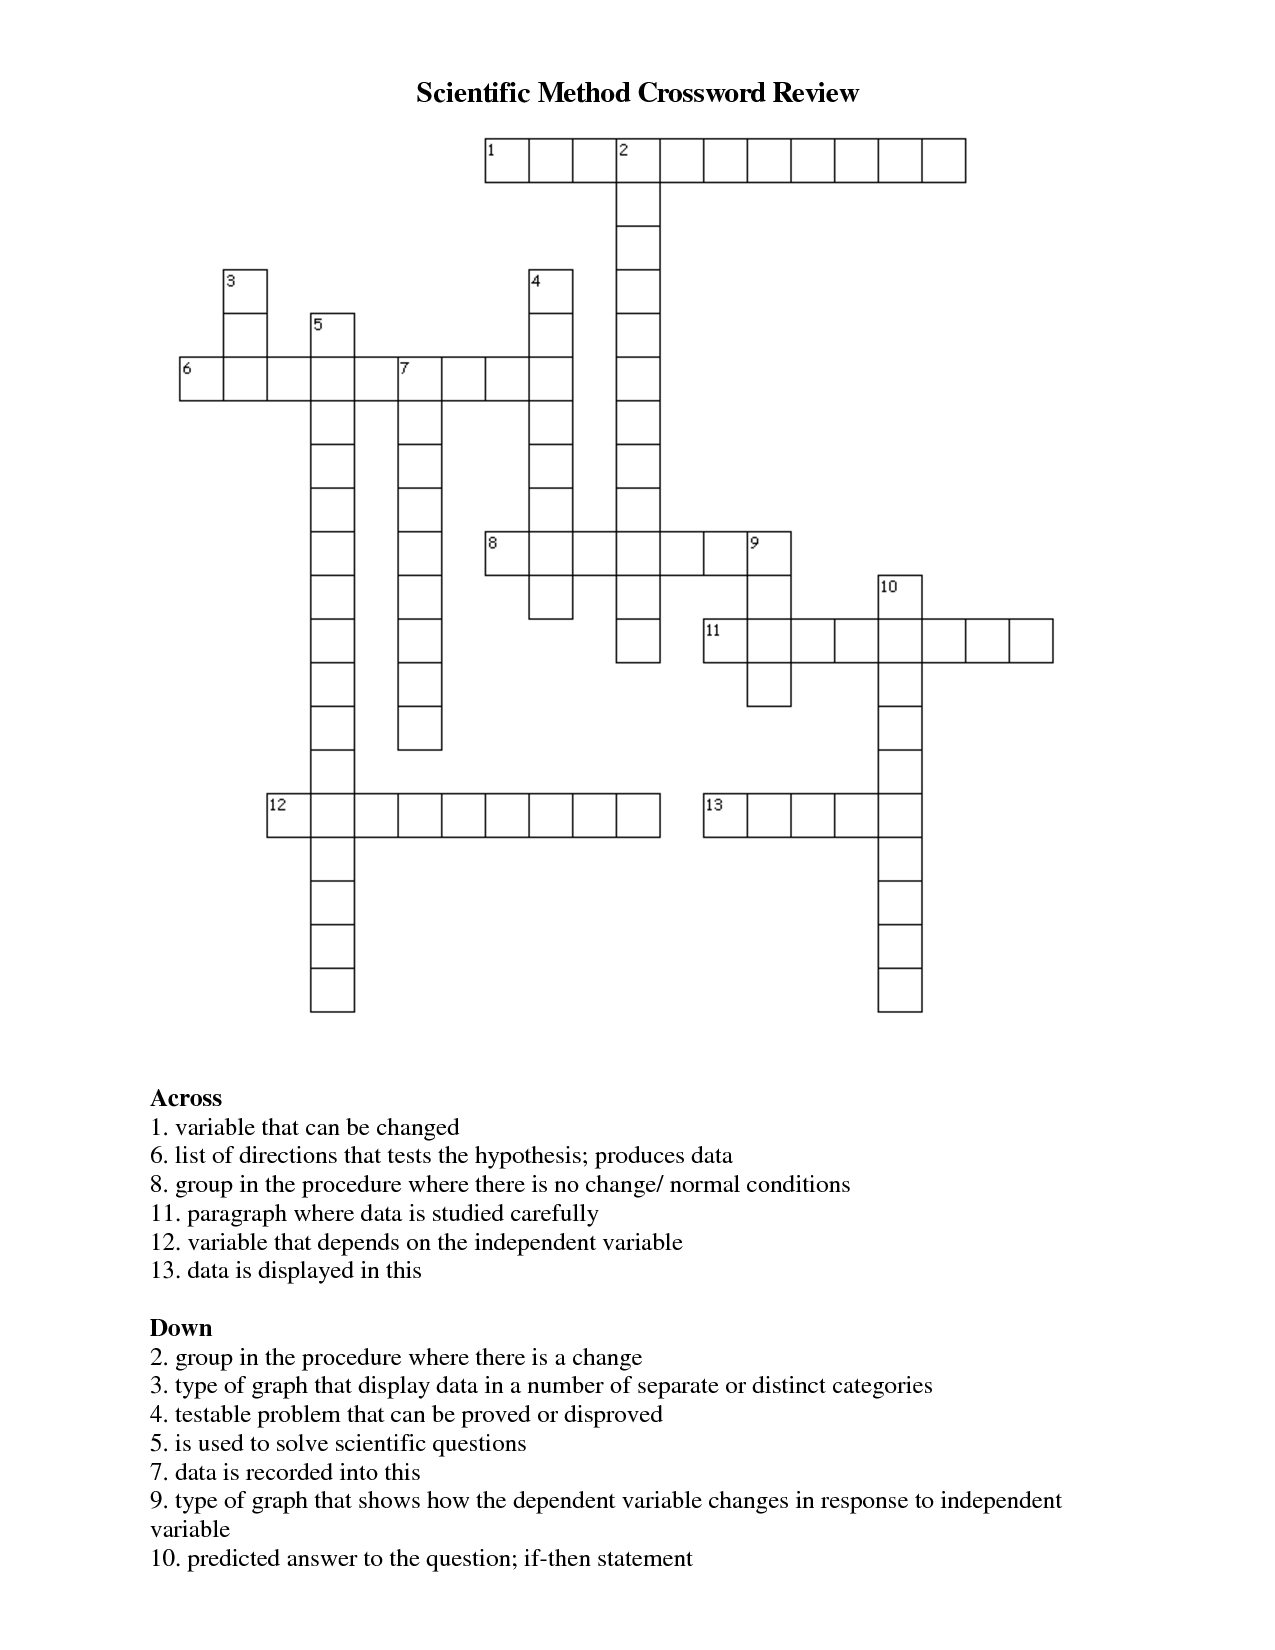 spooky figurative language crossword puzzle answer key